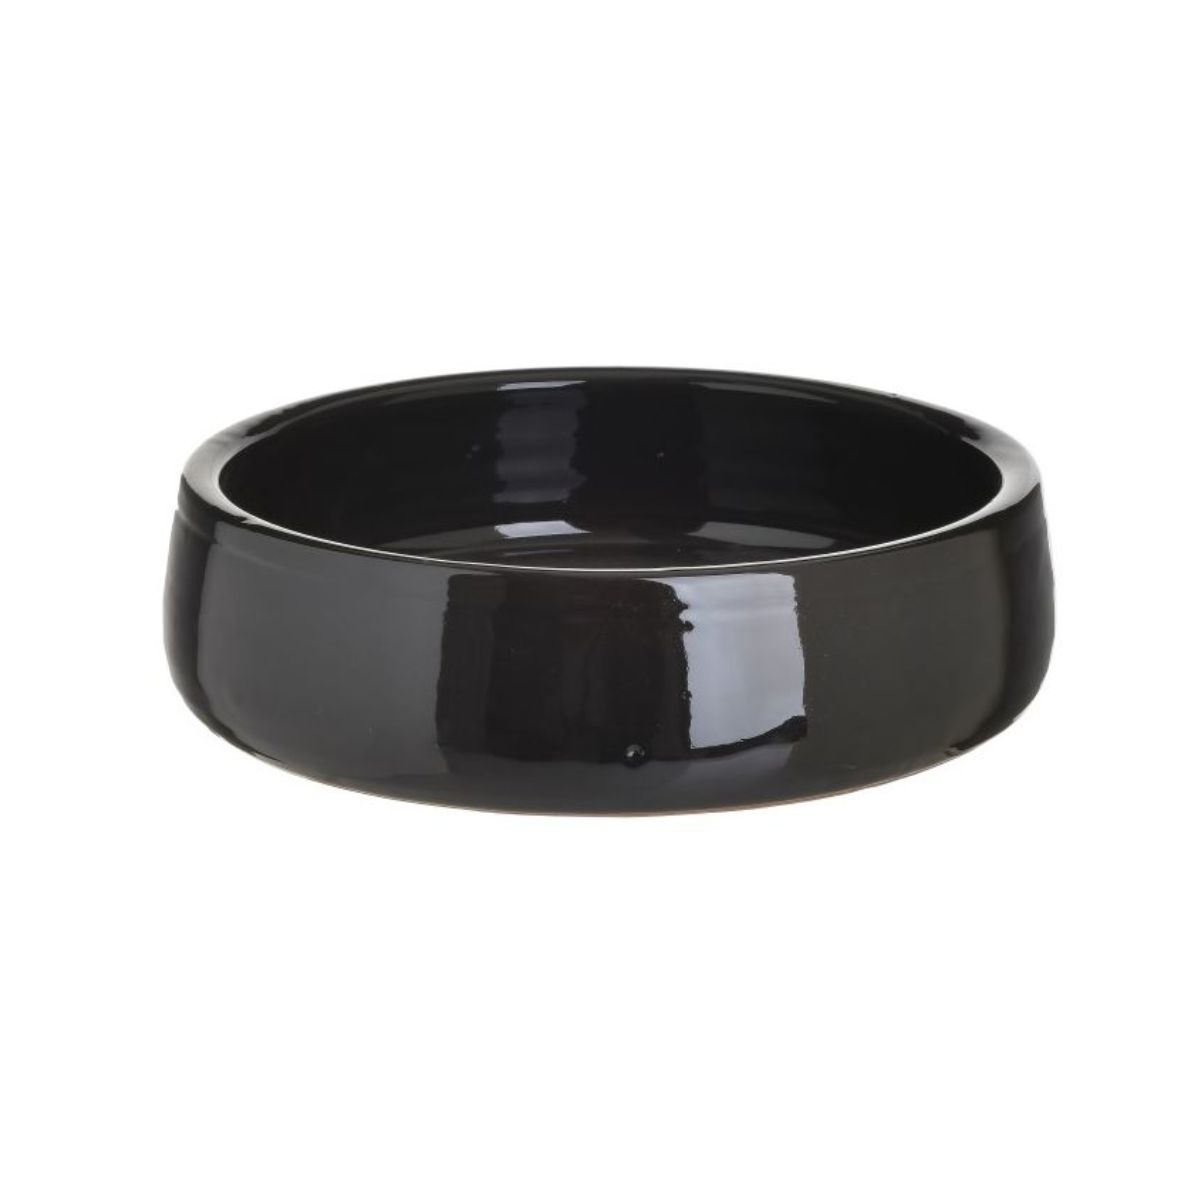 Bucatarie - Vas ceramic negru pentru cuptor Φ29 cm Inart, hectarul.ro